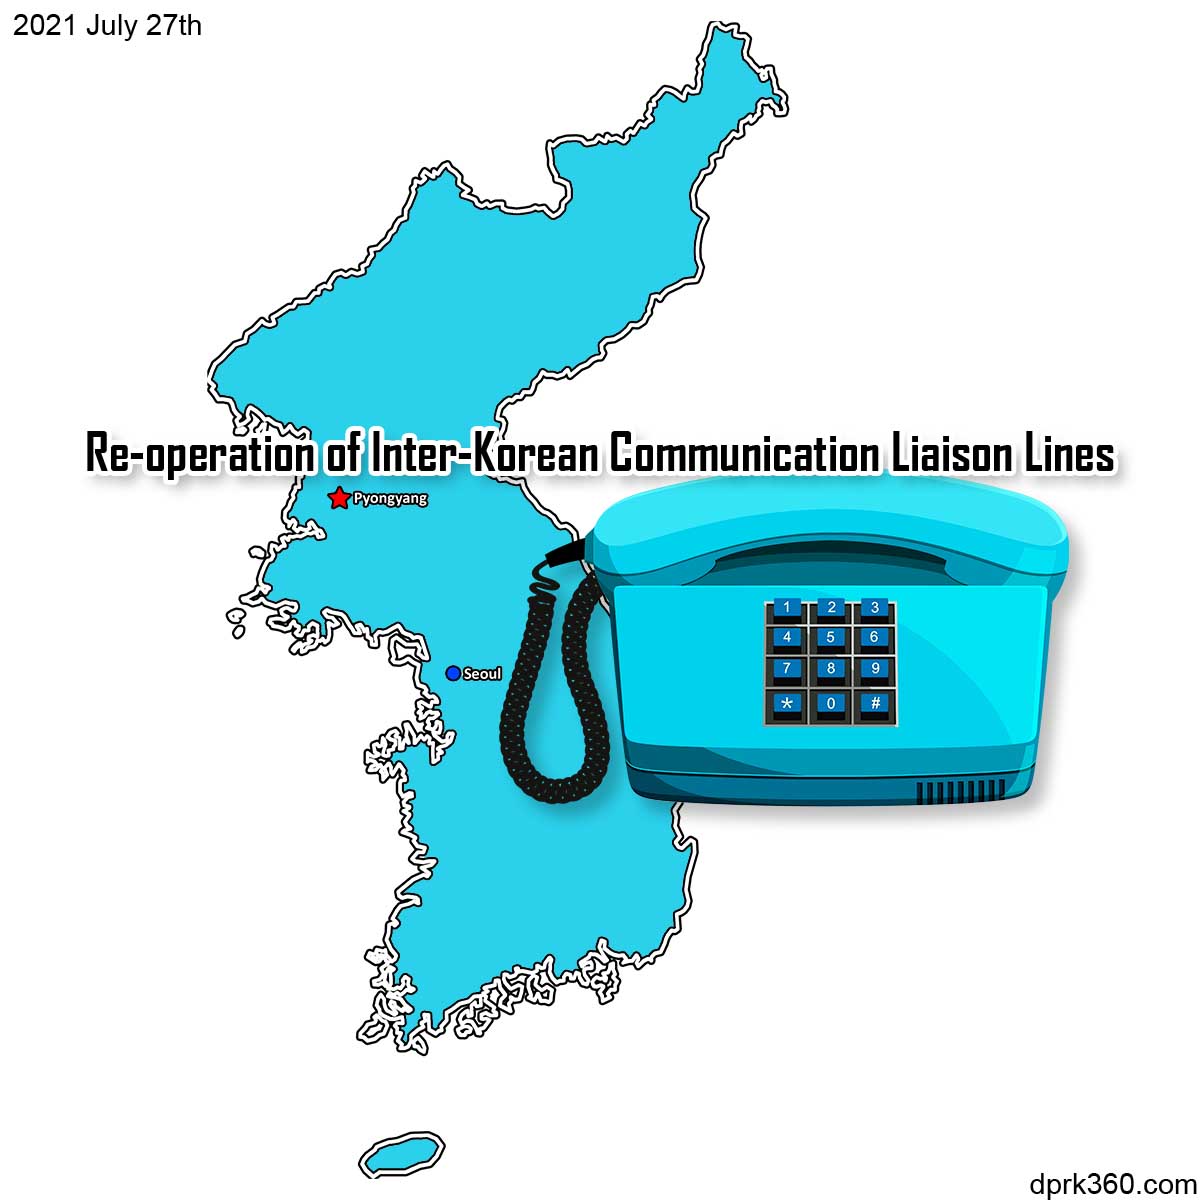 Re-operation of Inter-Korean Communication Liaison Lines